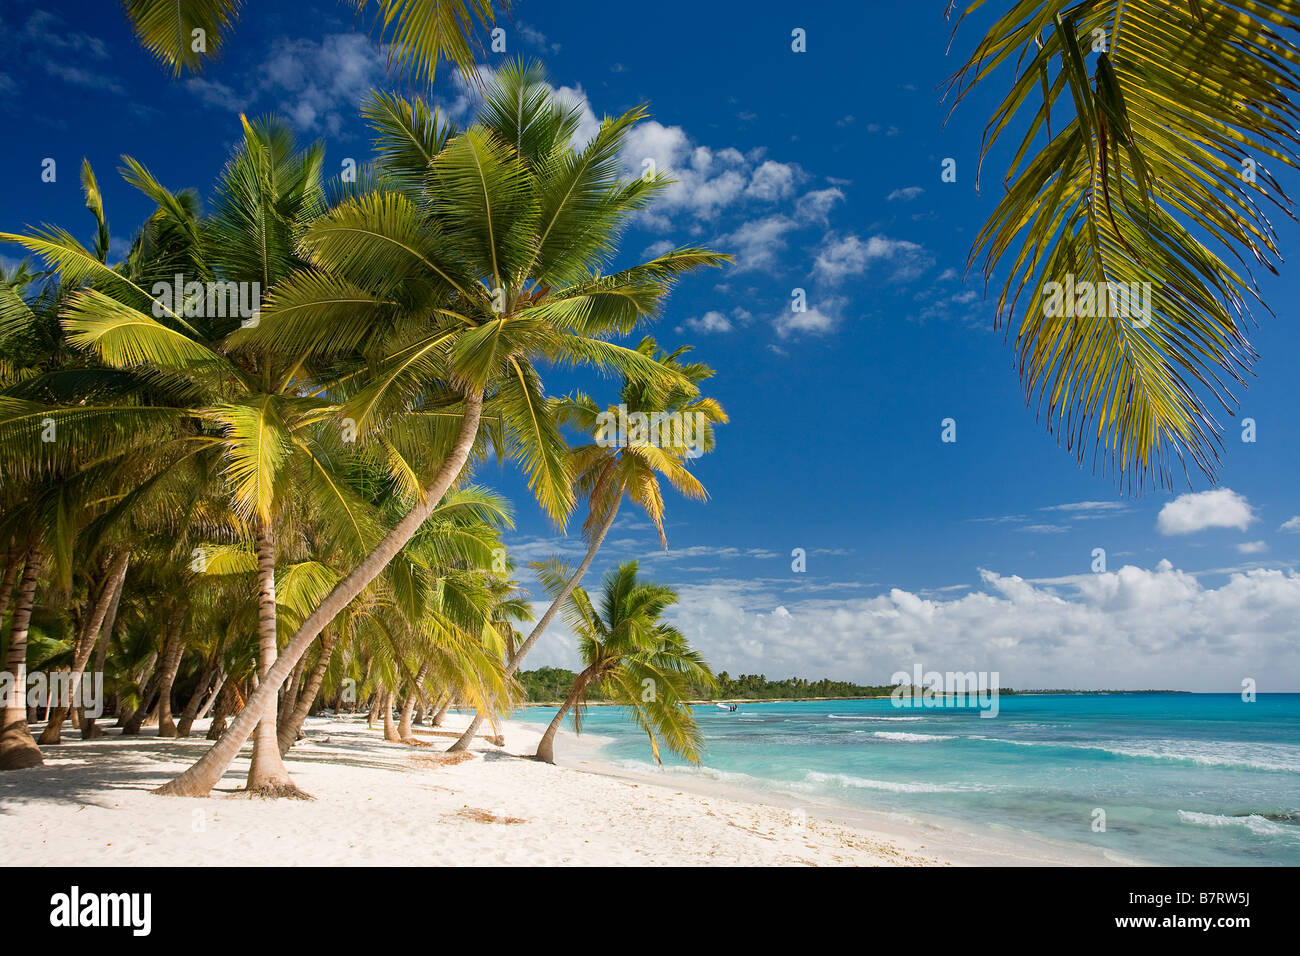 BEACH ON SAONA ISLAND PARQUE NATIONAL DEL ESTE DOMINICAN REPUBLIC CARIBBEAN Stock Photo